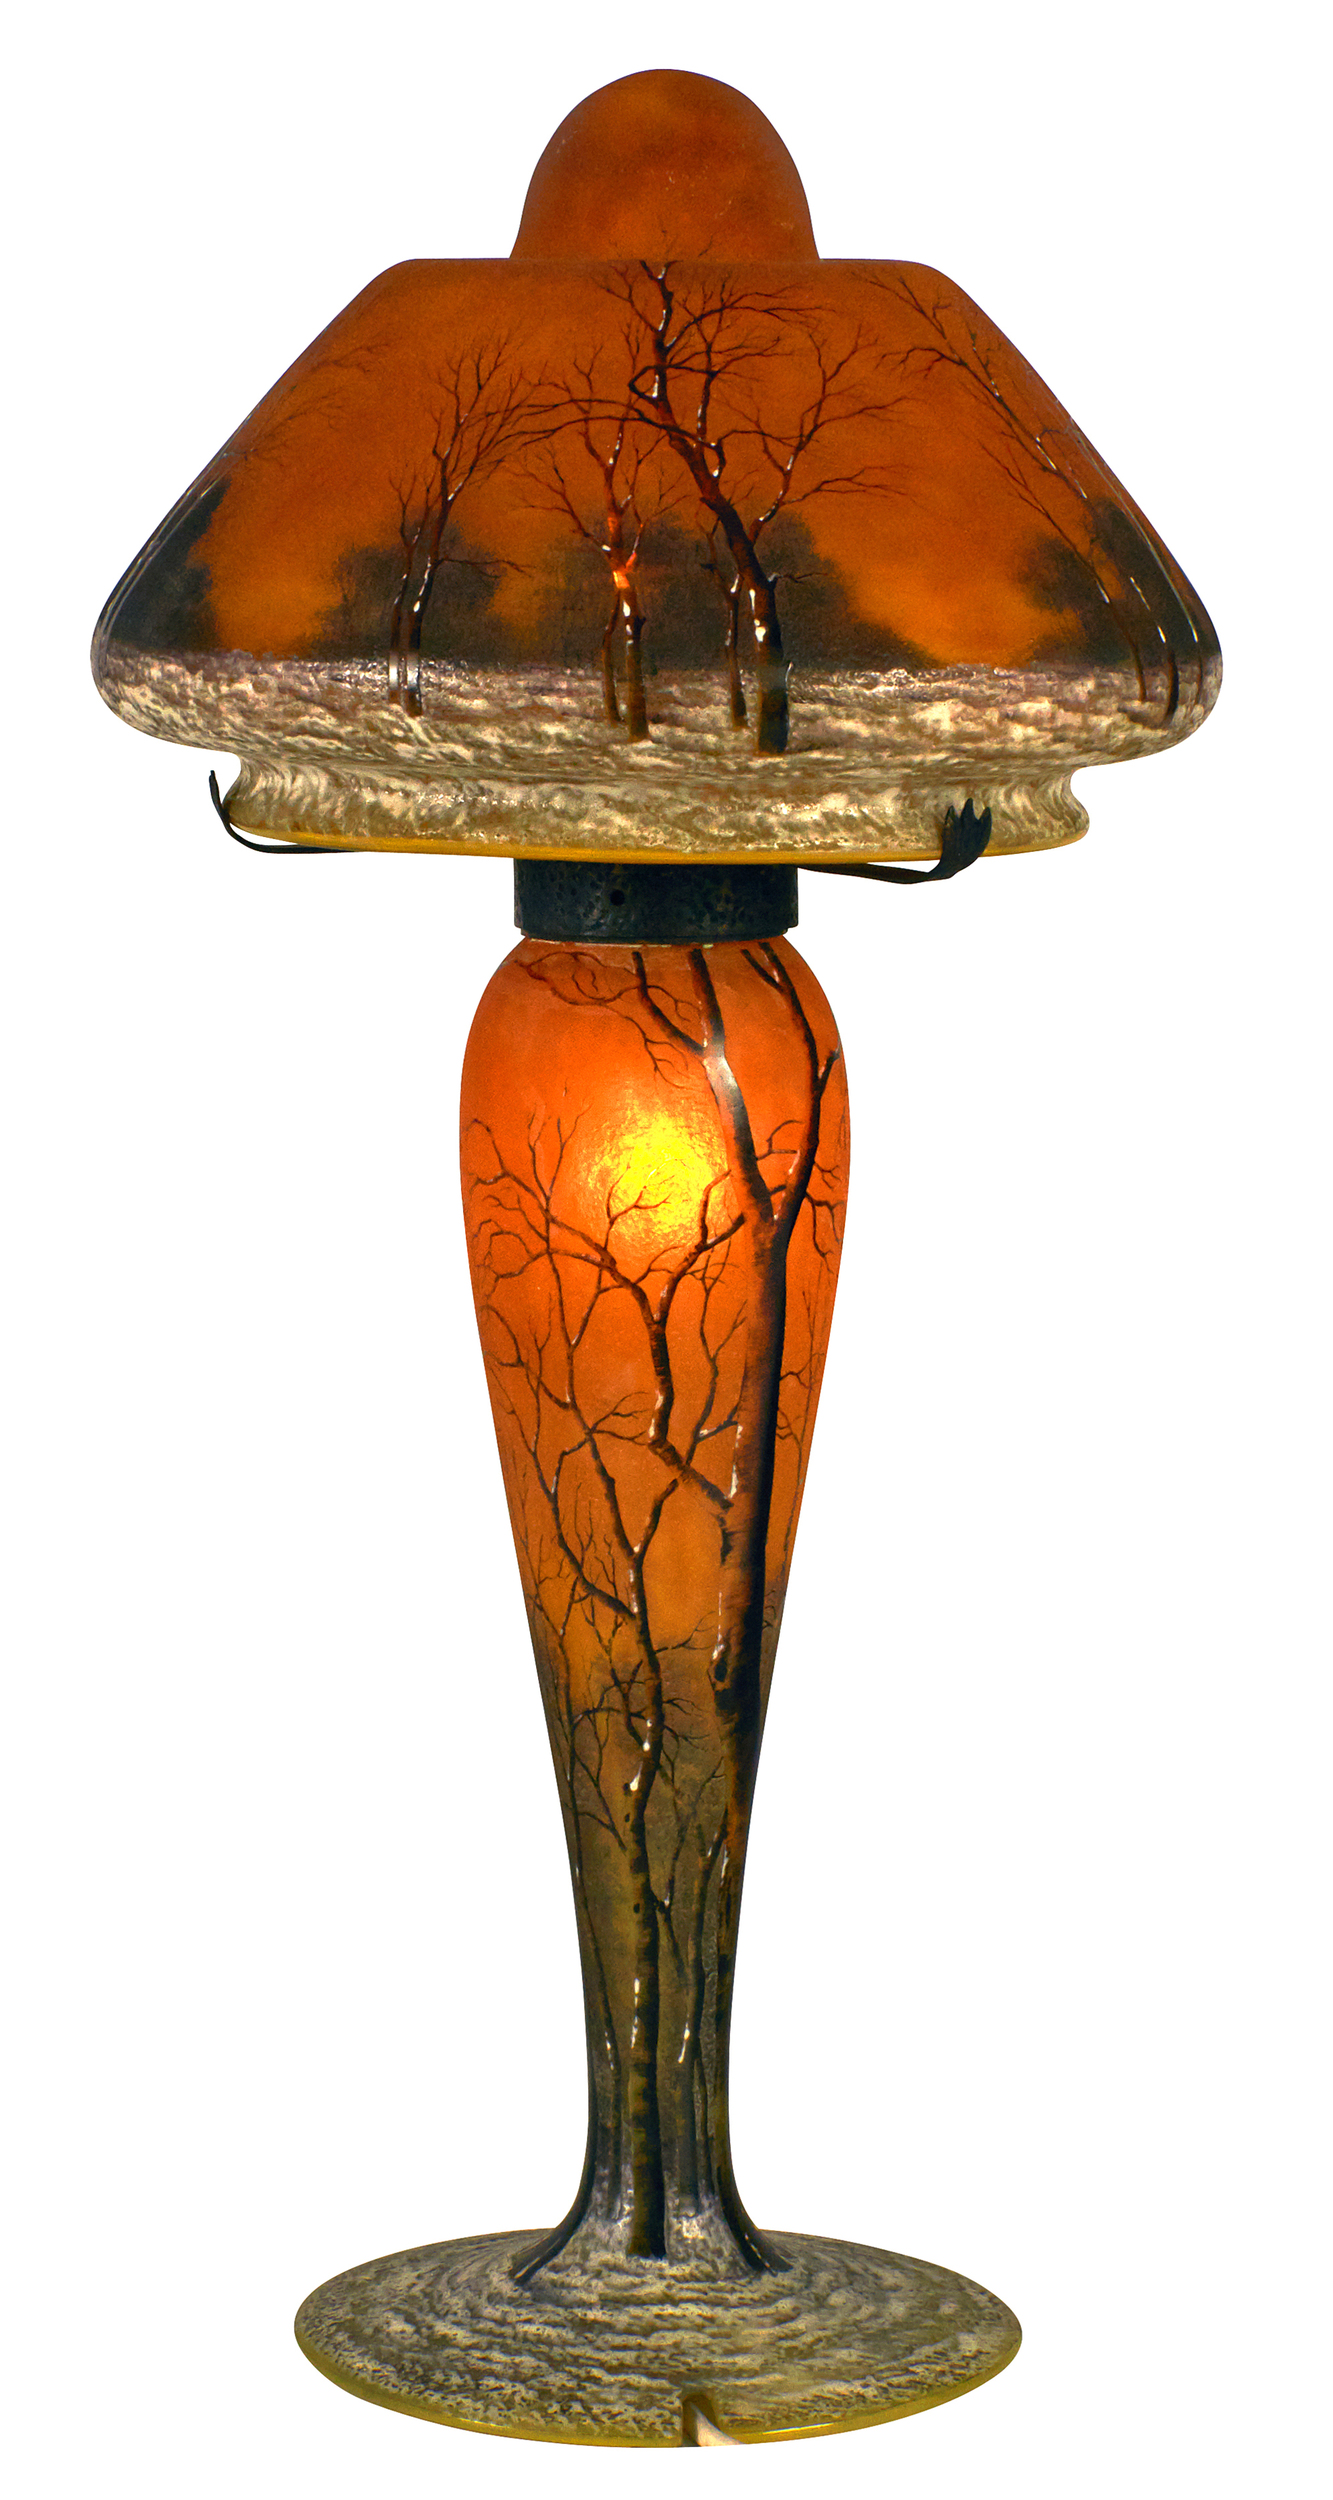 Daum lamp | Treadway Gallery